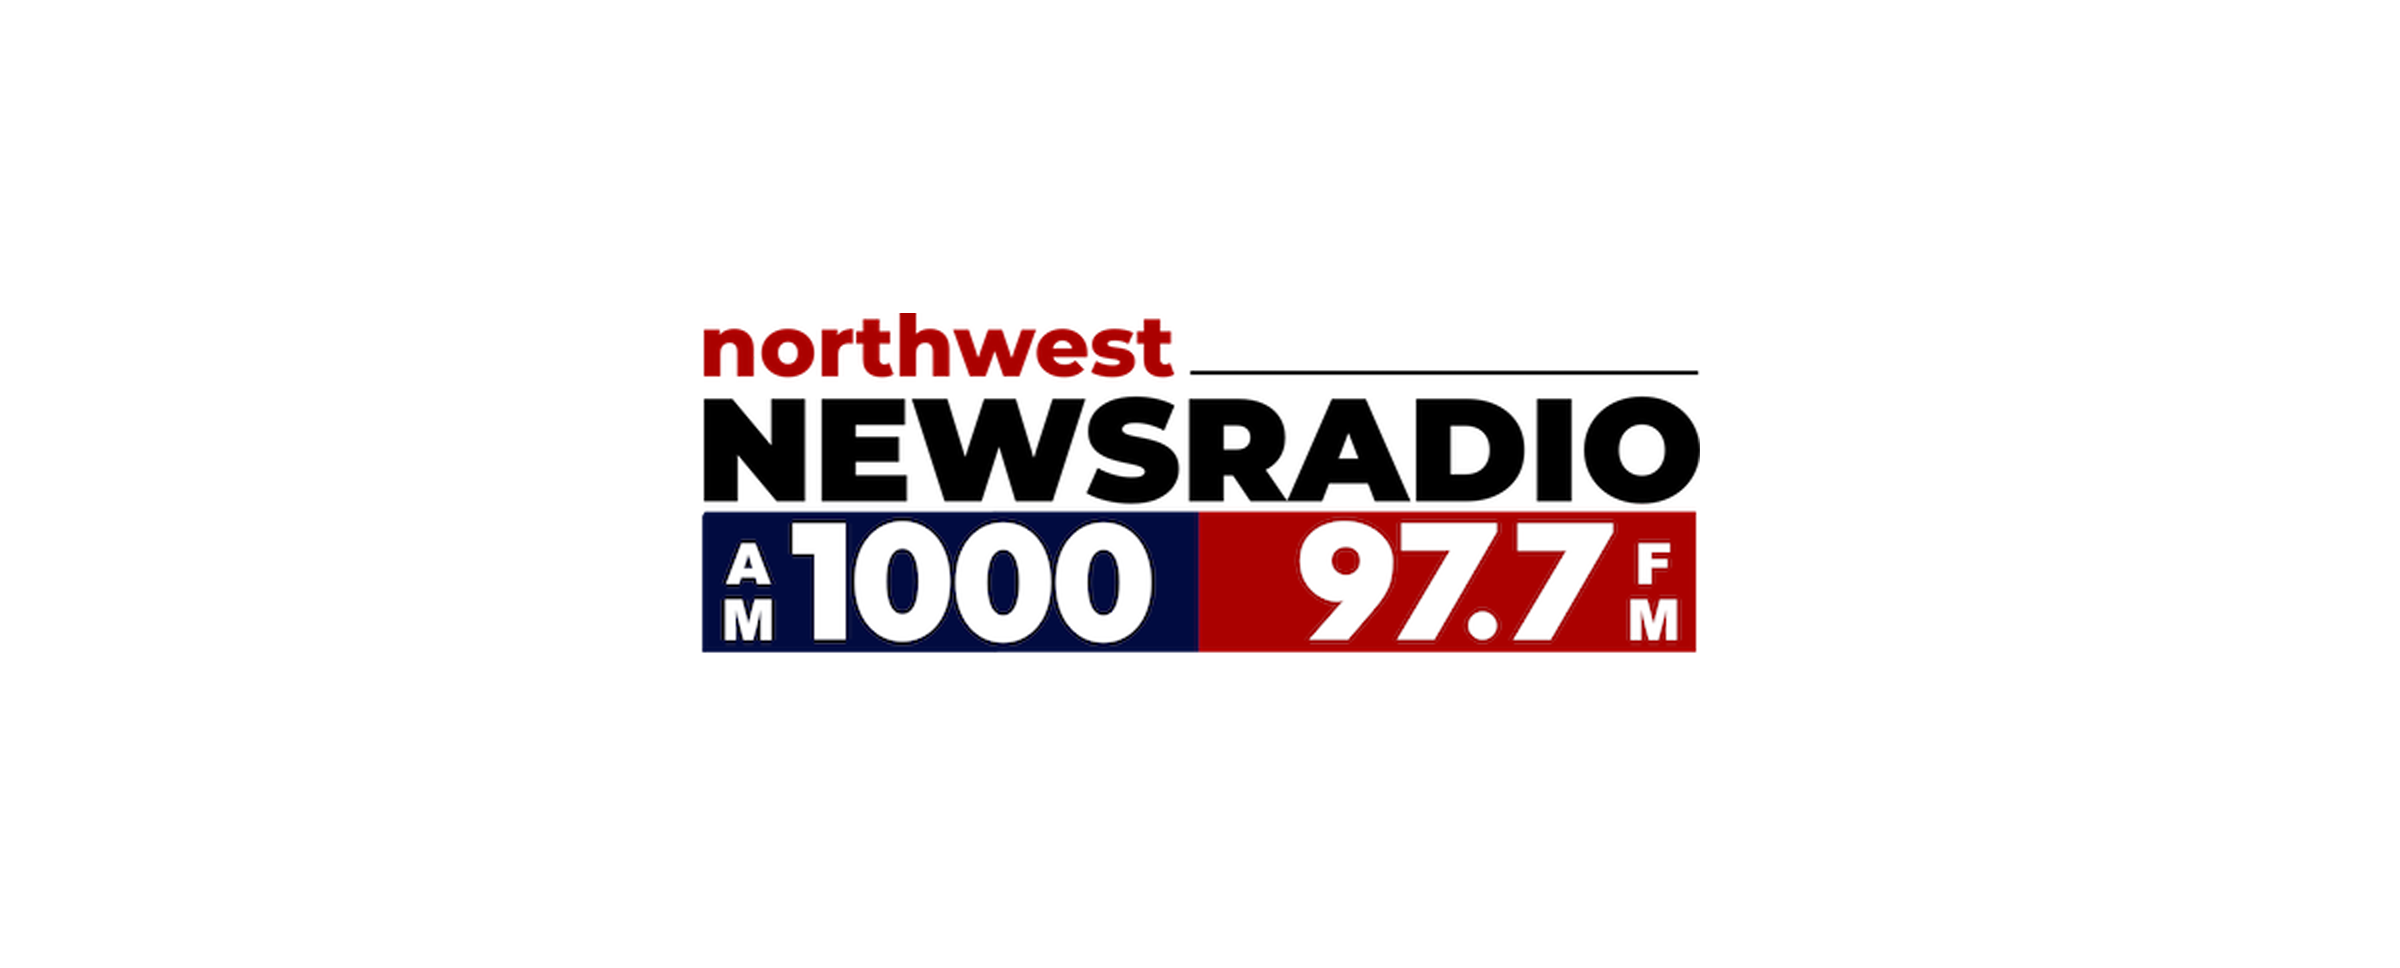 NW News Radio